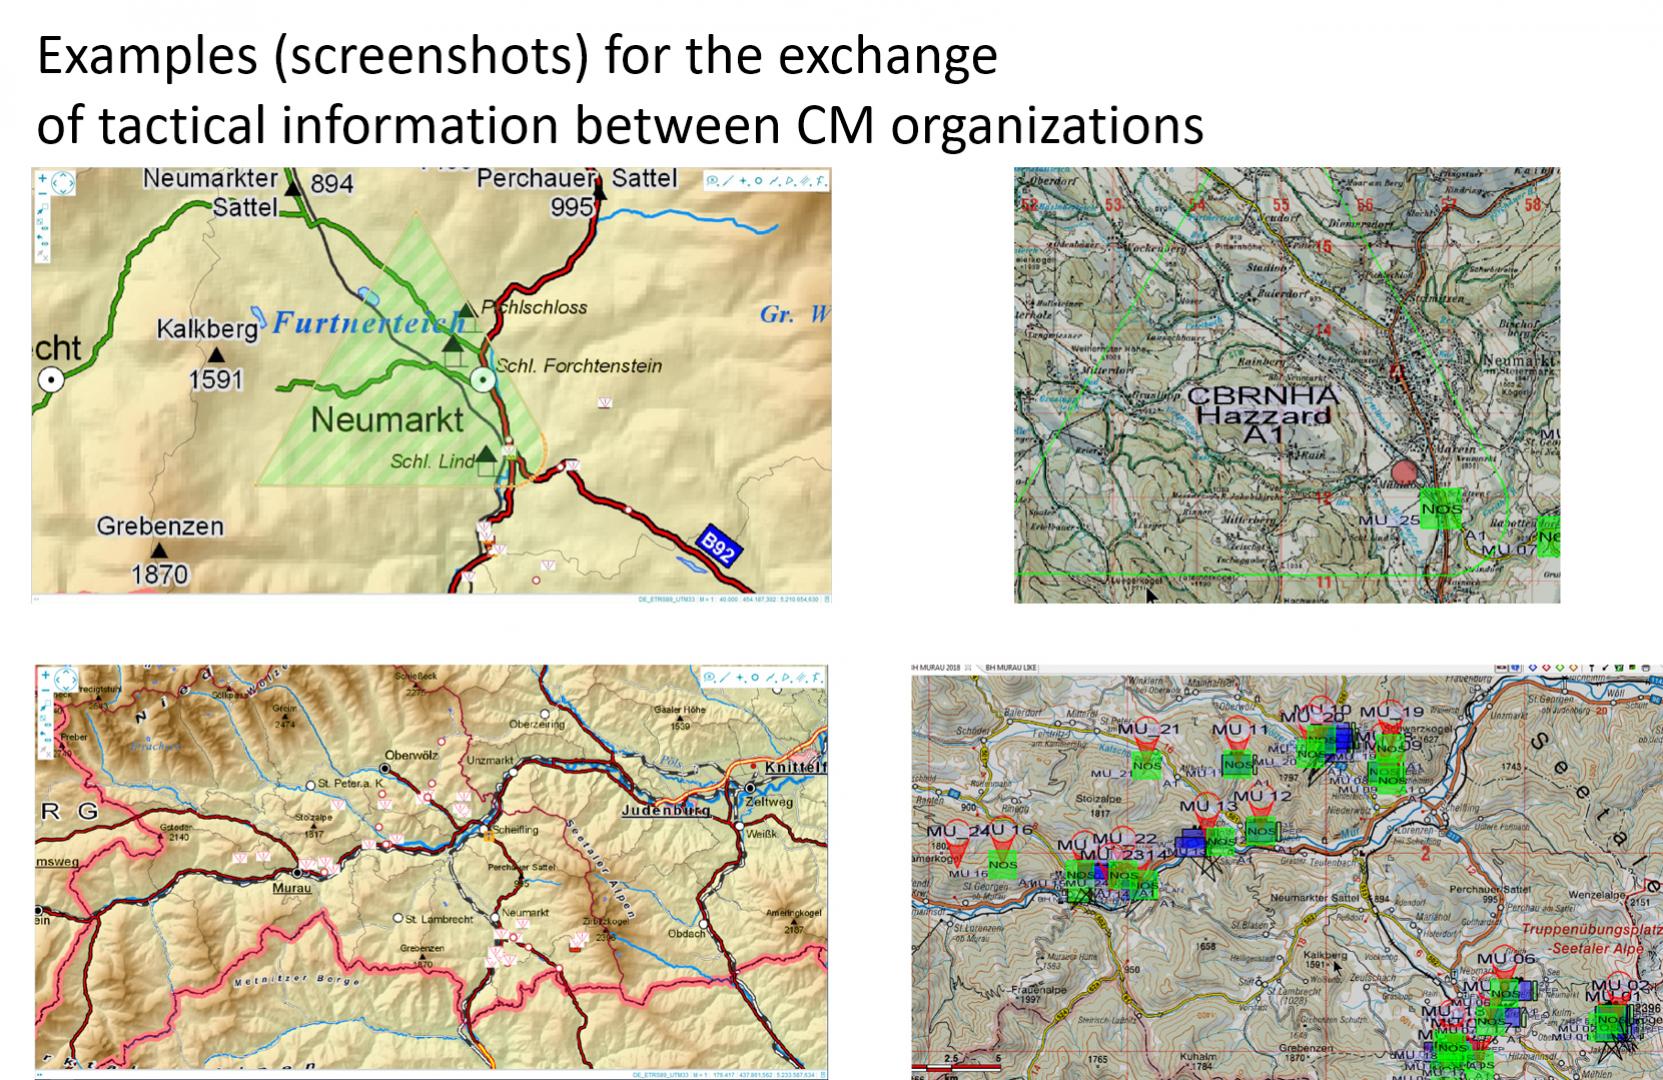 Examples (screenshots) of the exchange of tactical information between CM organizations